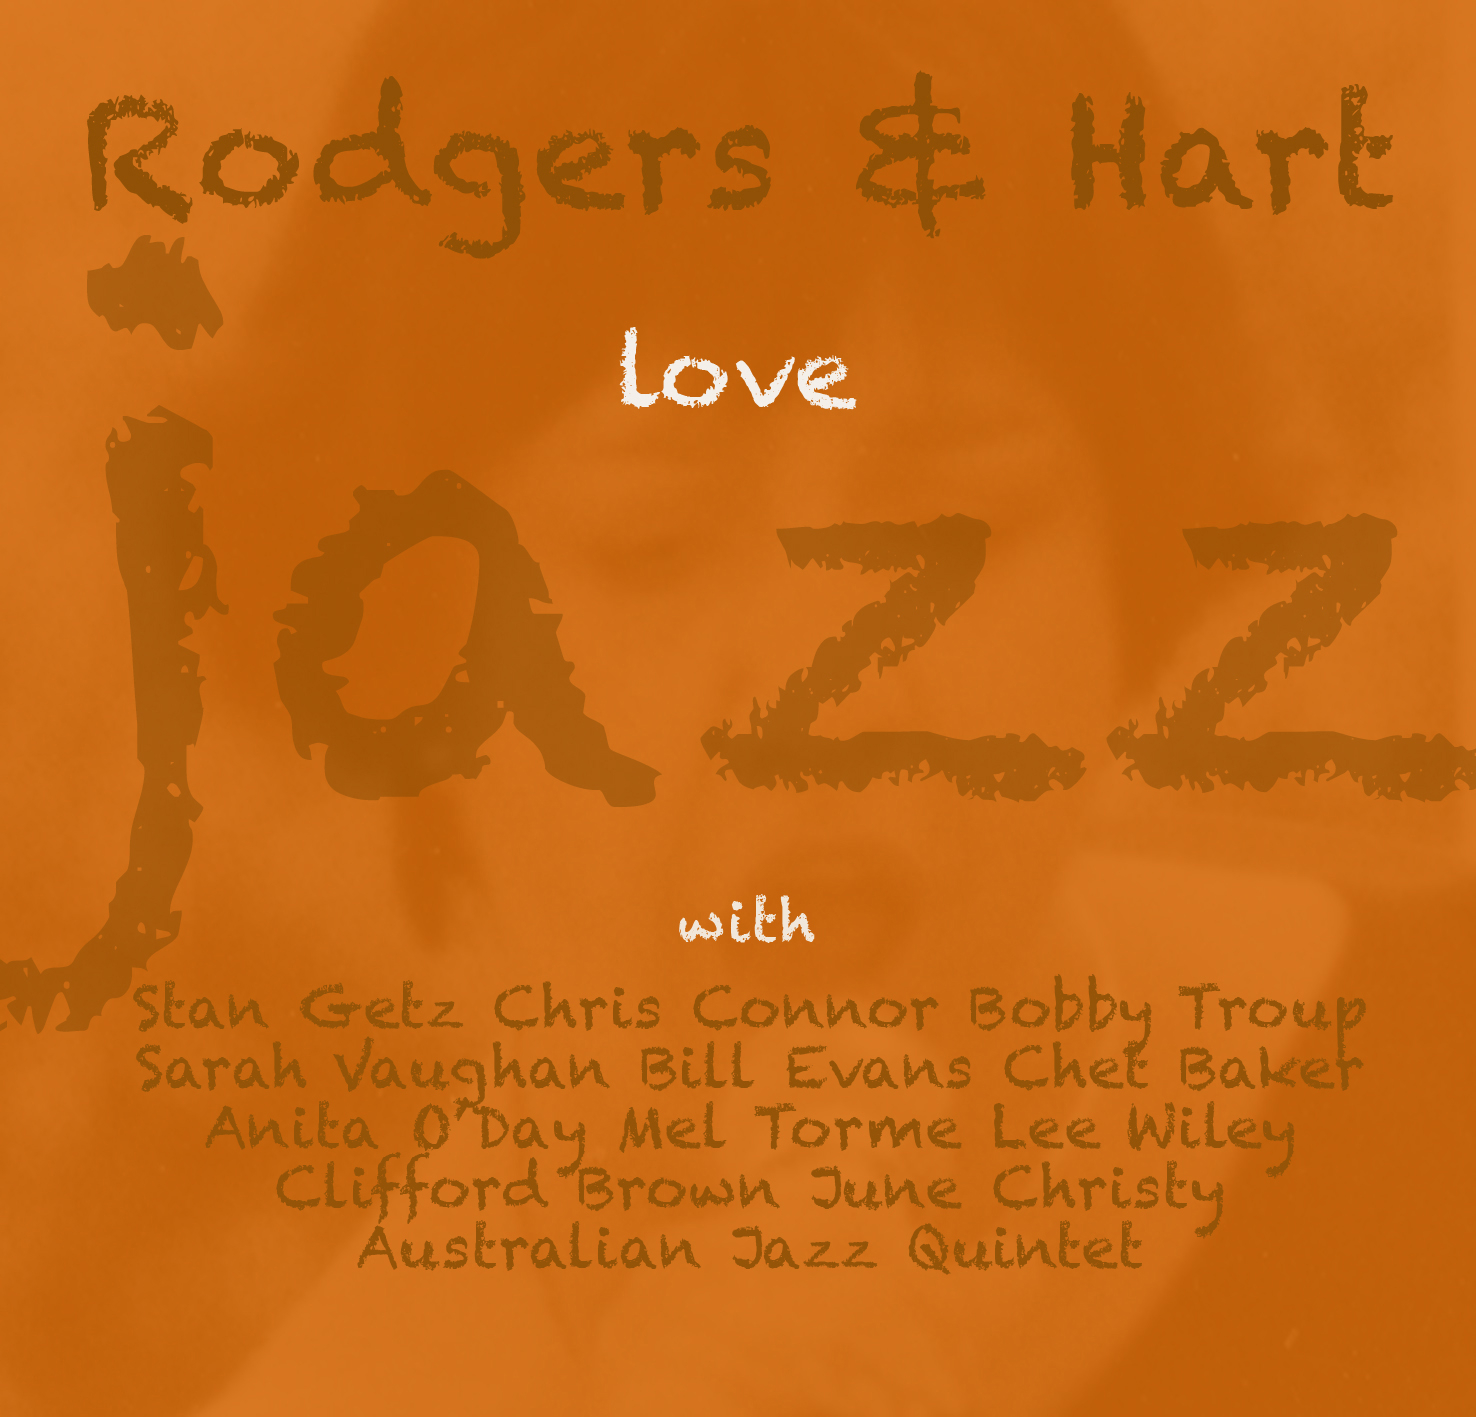 Rodgers & Hart Love Jazz